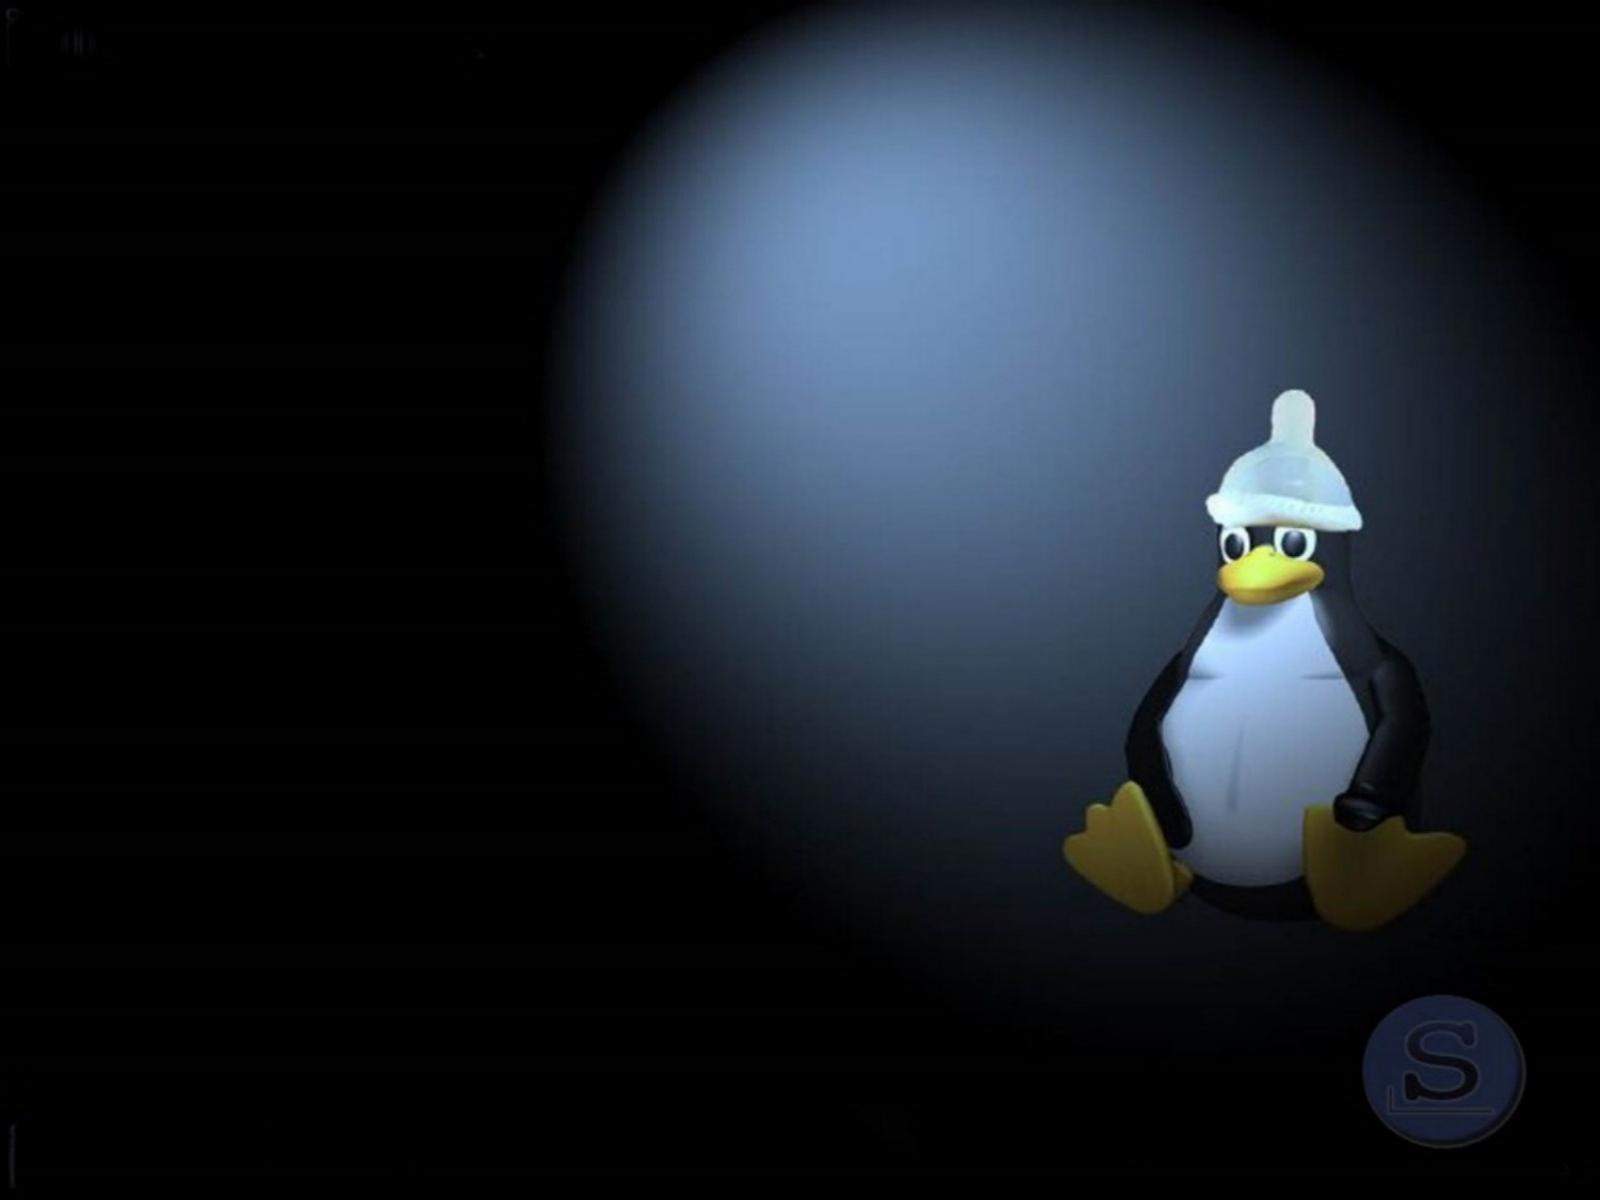 Tux Penguin Linux Slackware Wallpaper The New Background For Slack ...